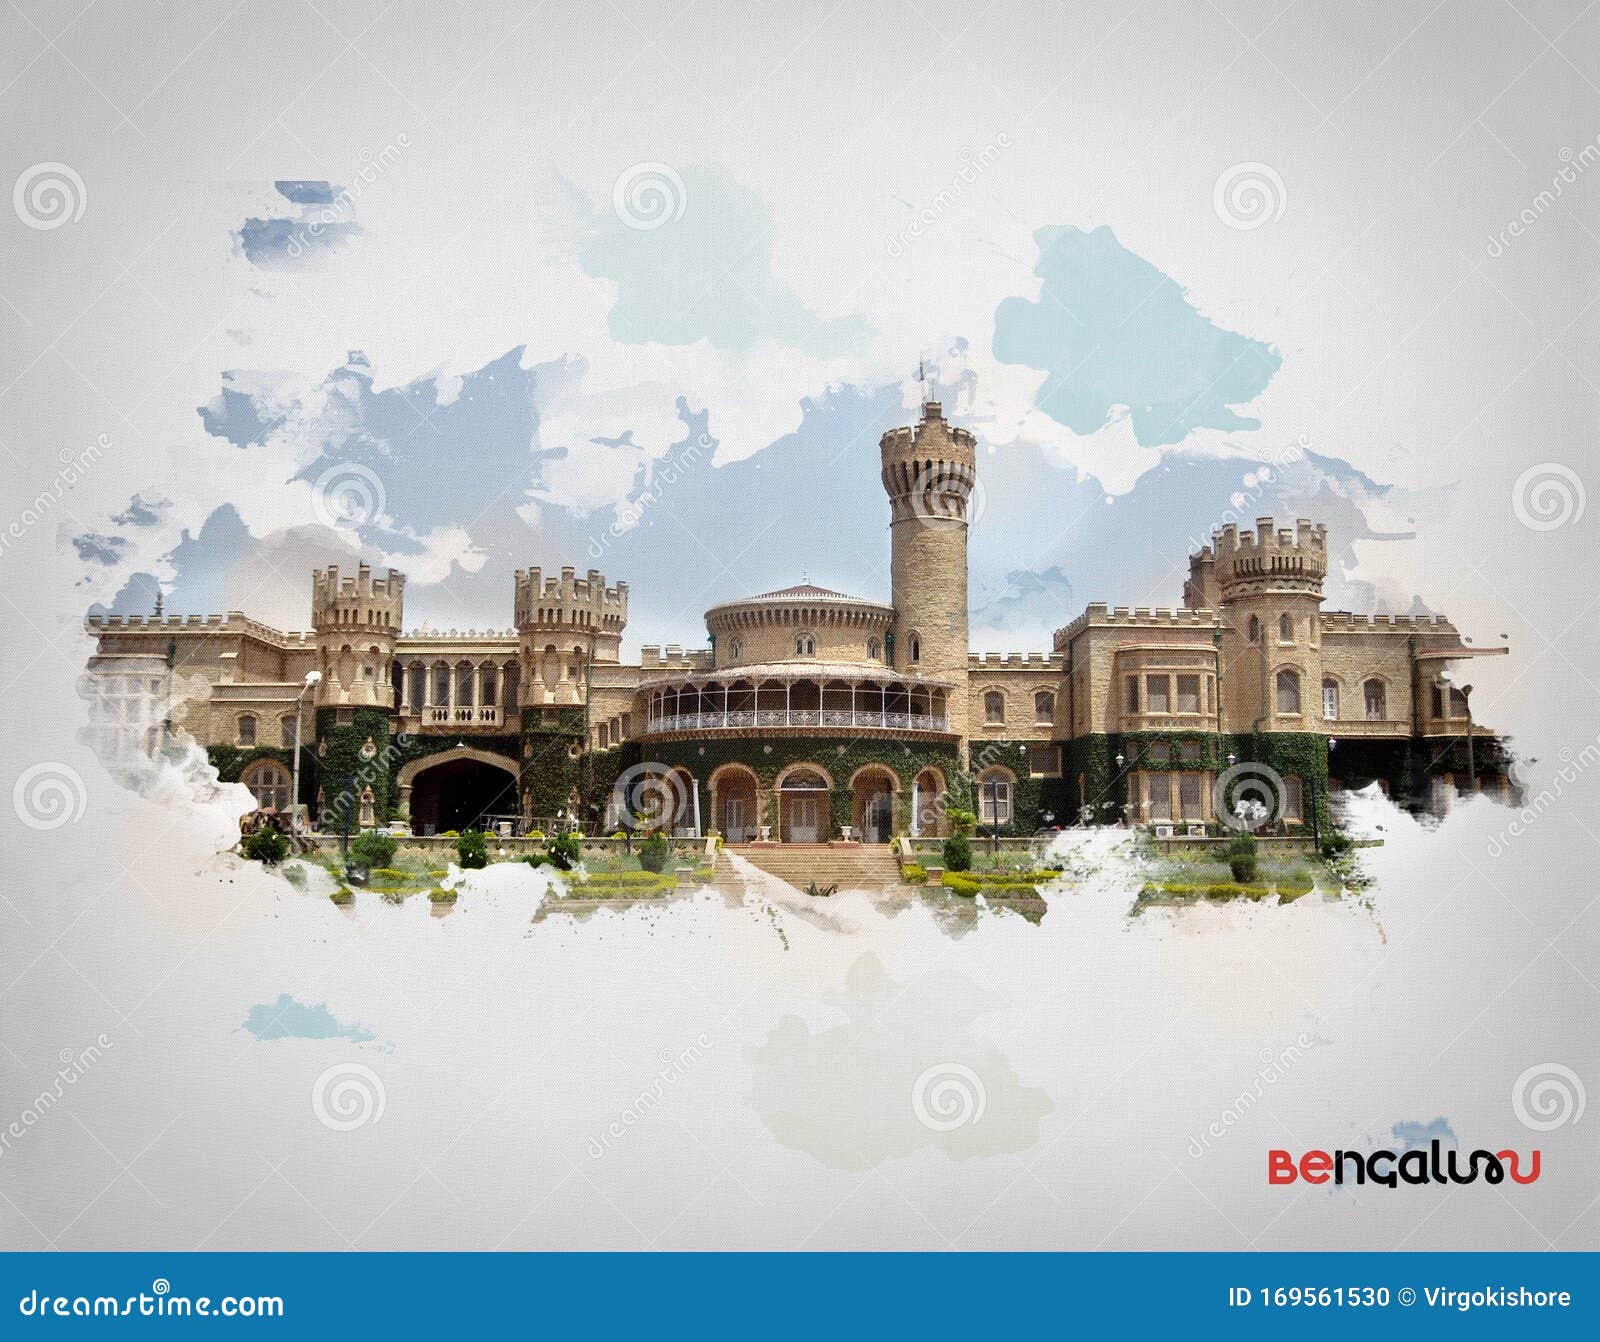 Maharaja palace karnataka india Cut Out Stock Images & Pictures - Alamy